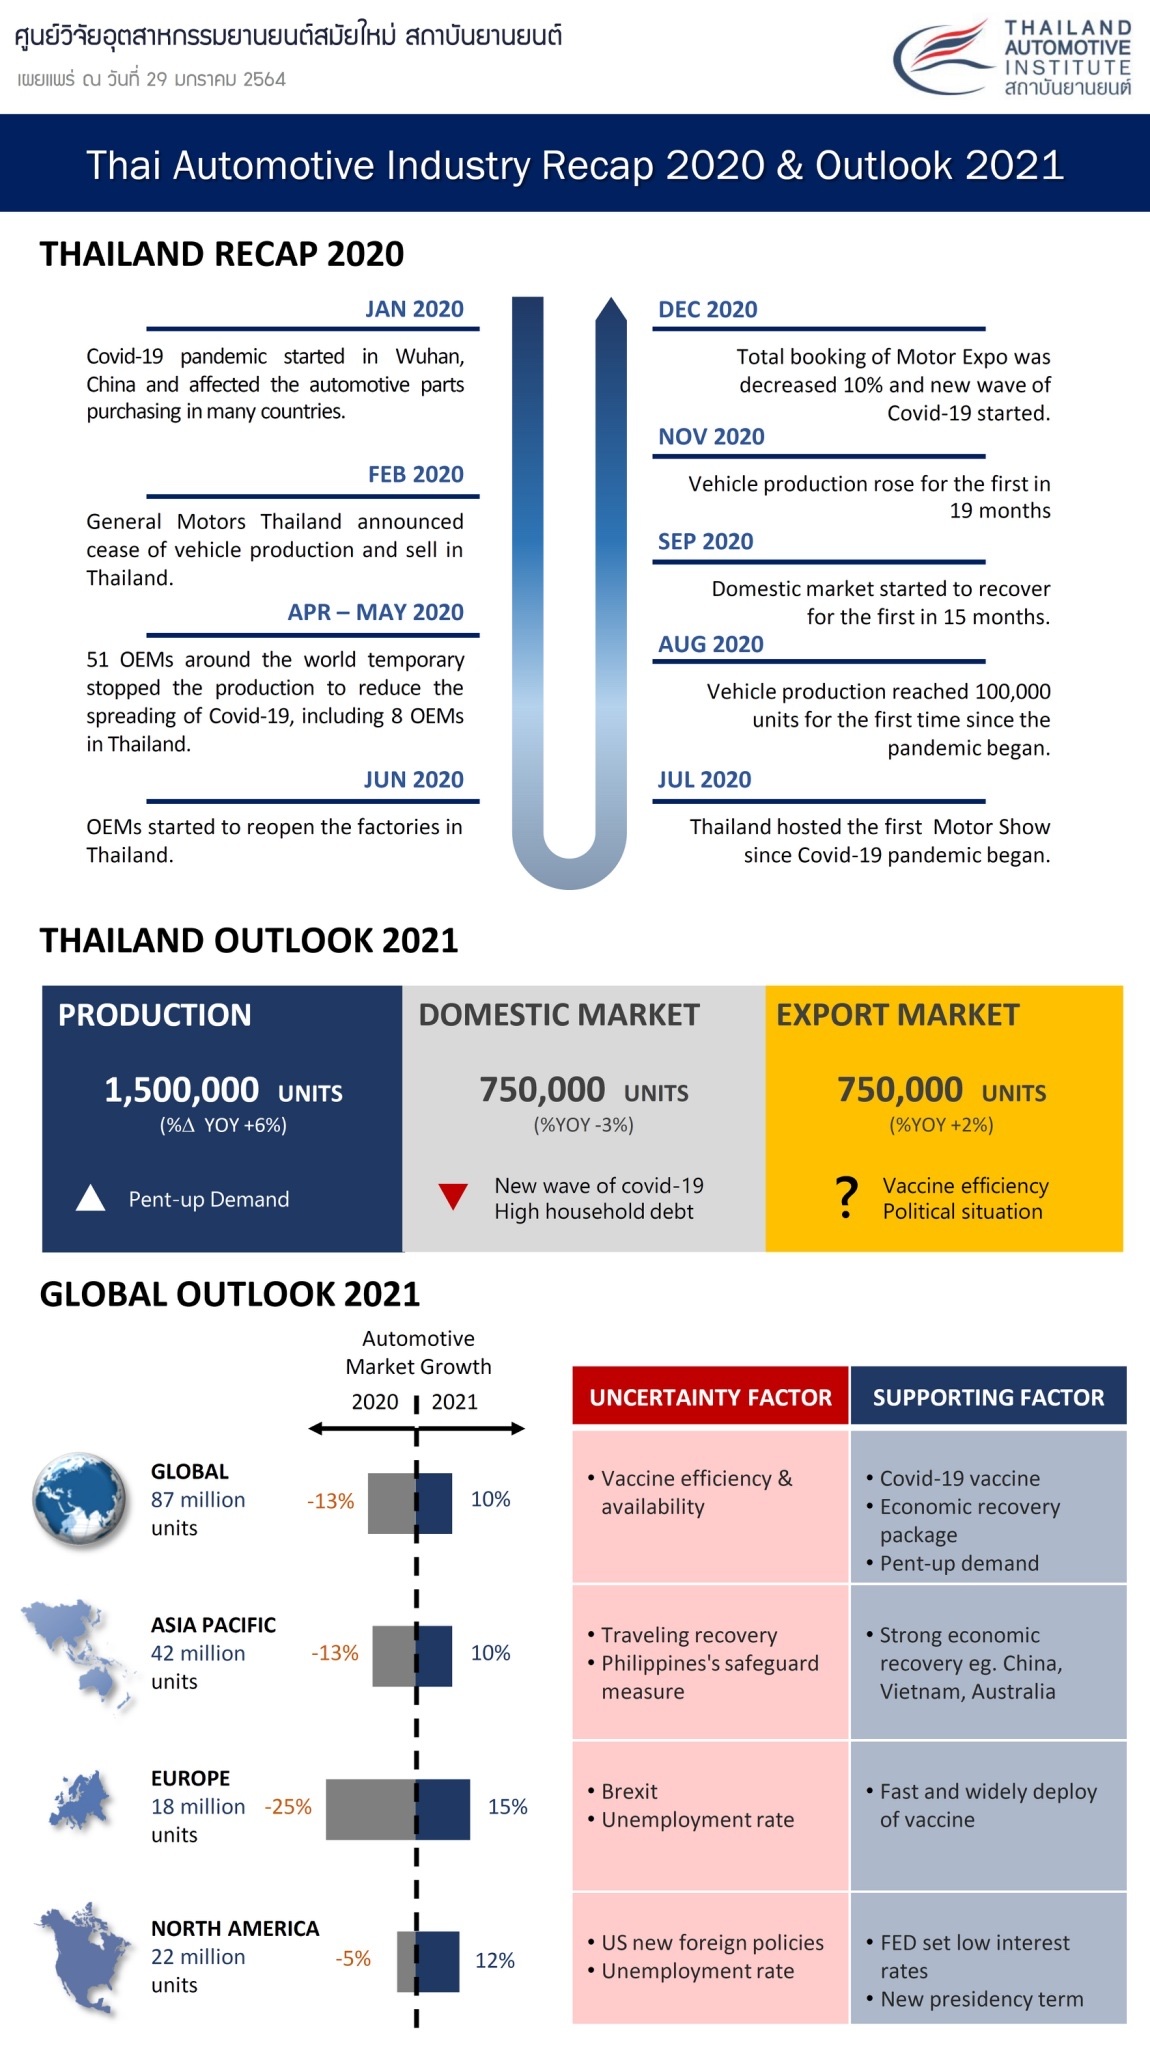 Thai Automotive Industry Recap 2020 & Outlook 2021